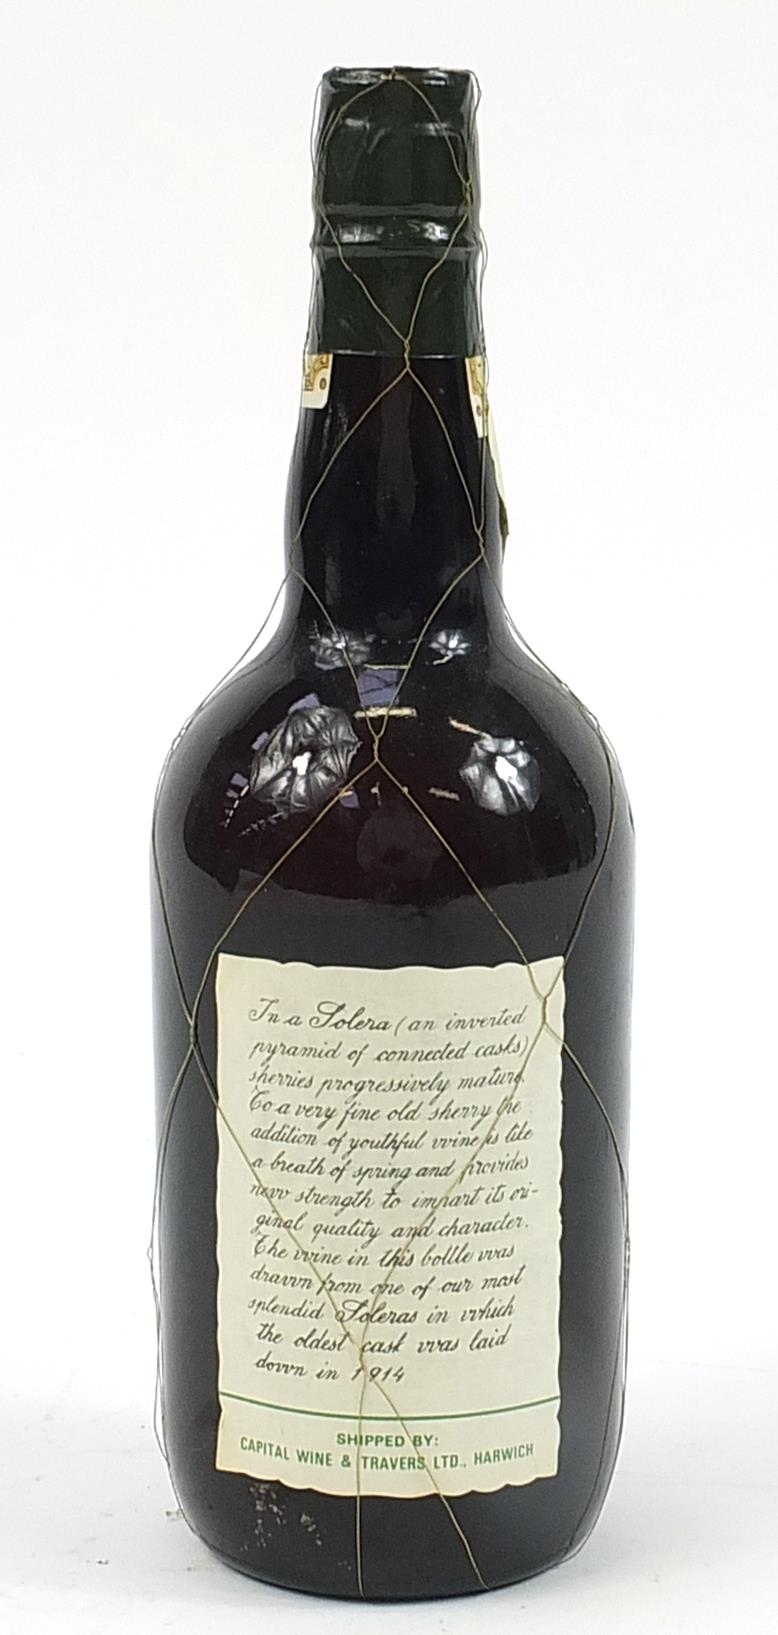 Bottle of 1914 Pemartin Solera sherry - Image 2 of 2